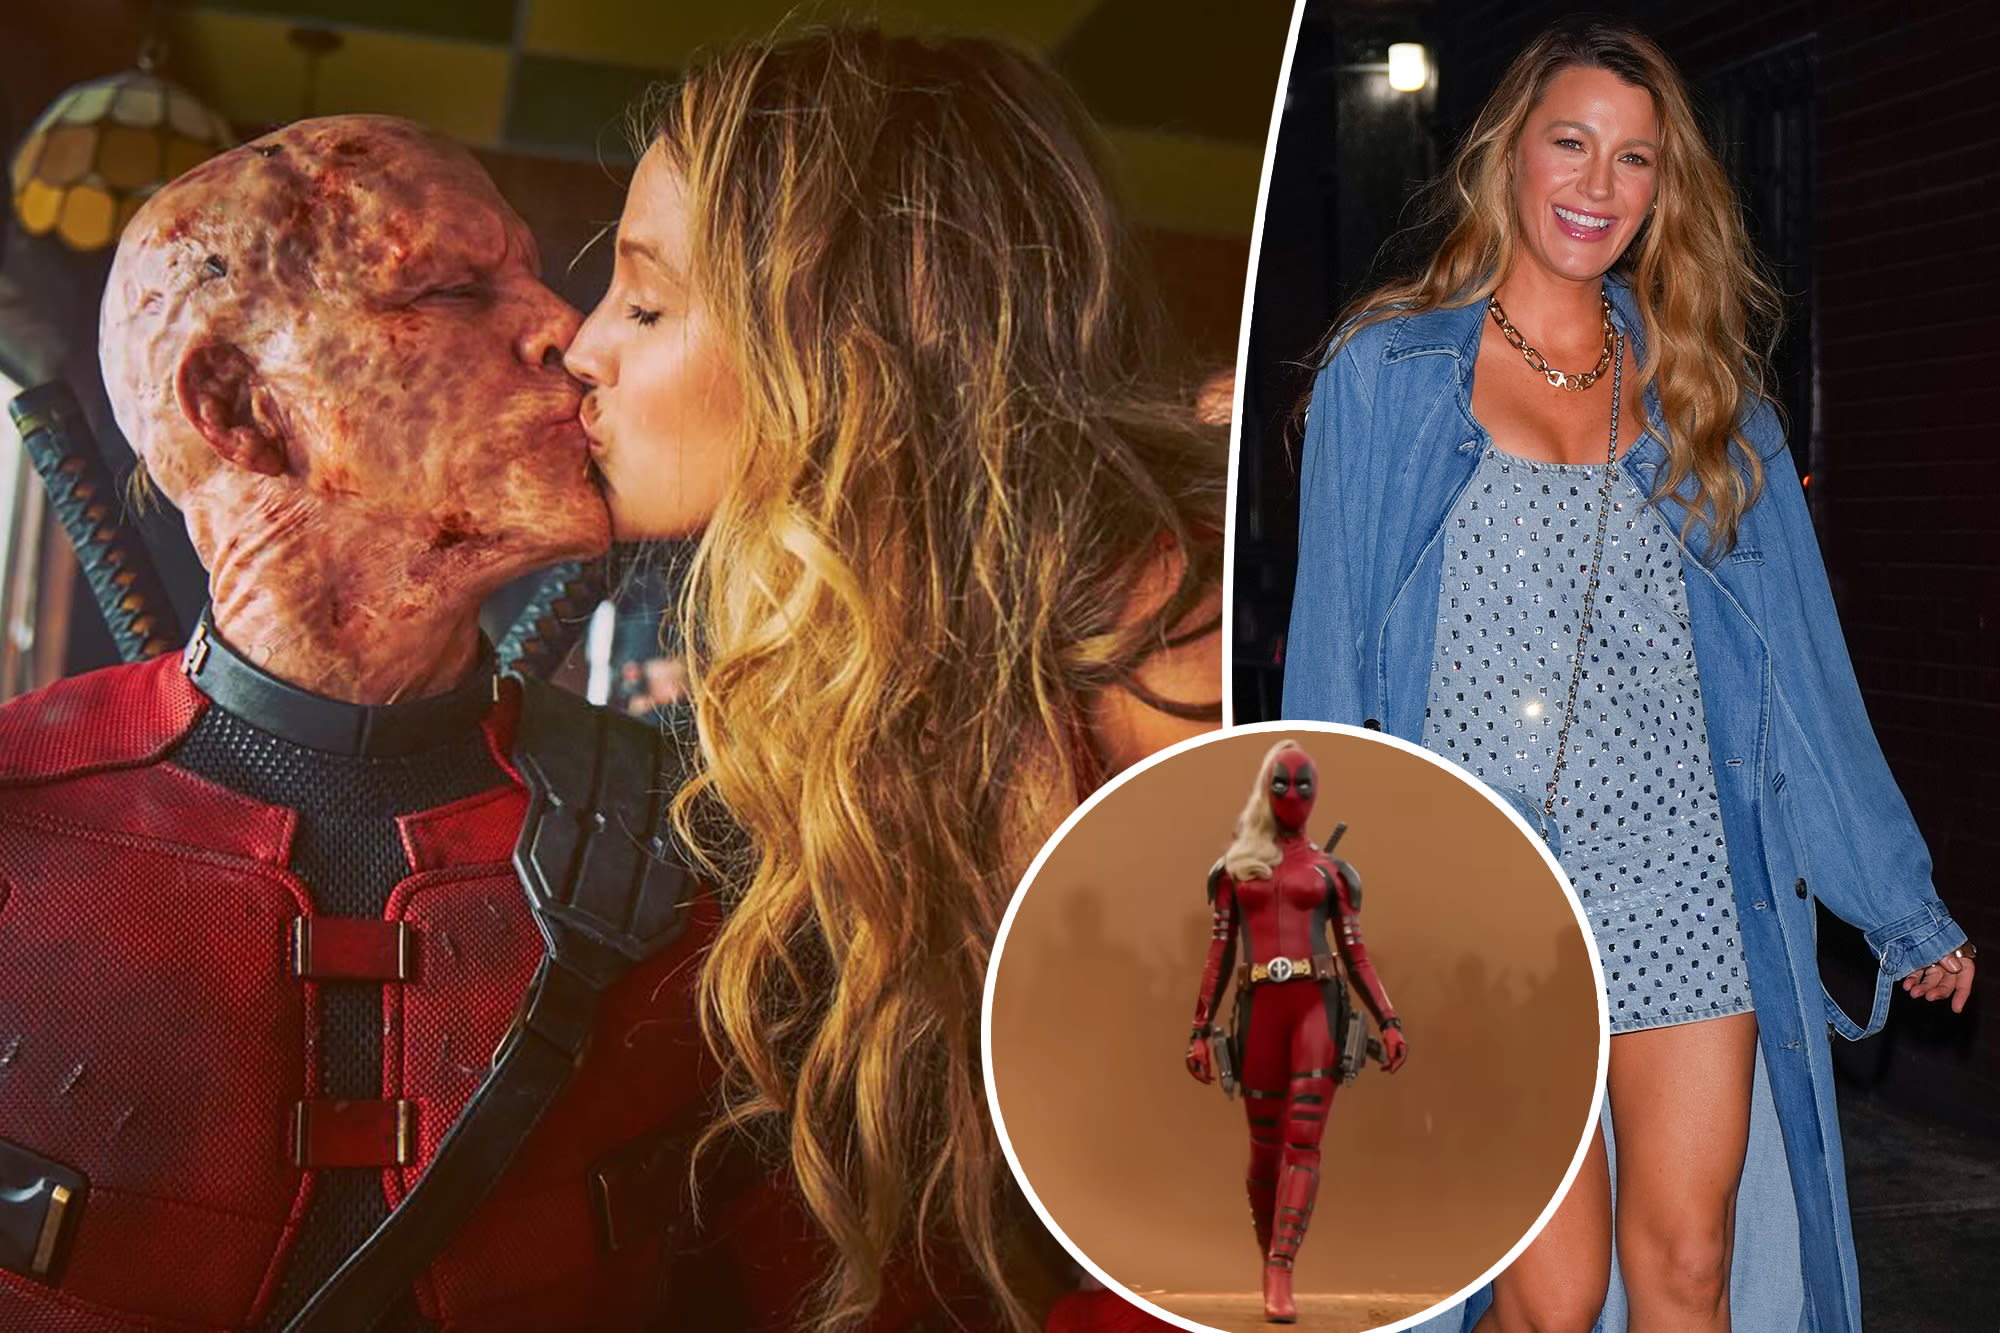 Is Blake Lively Lady Deadpool? ‘Deadpool & Wolverine’ set photo sparks wild fan theory